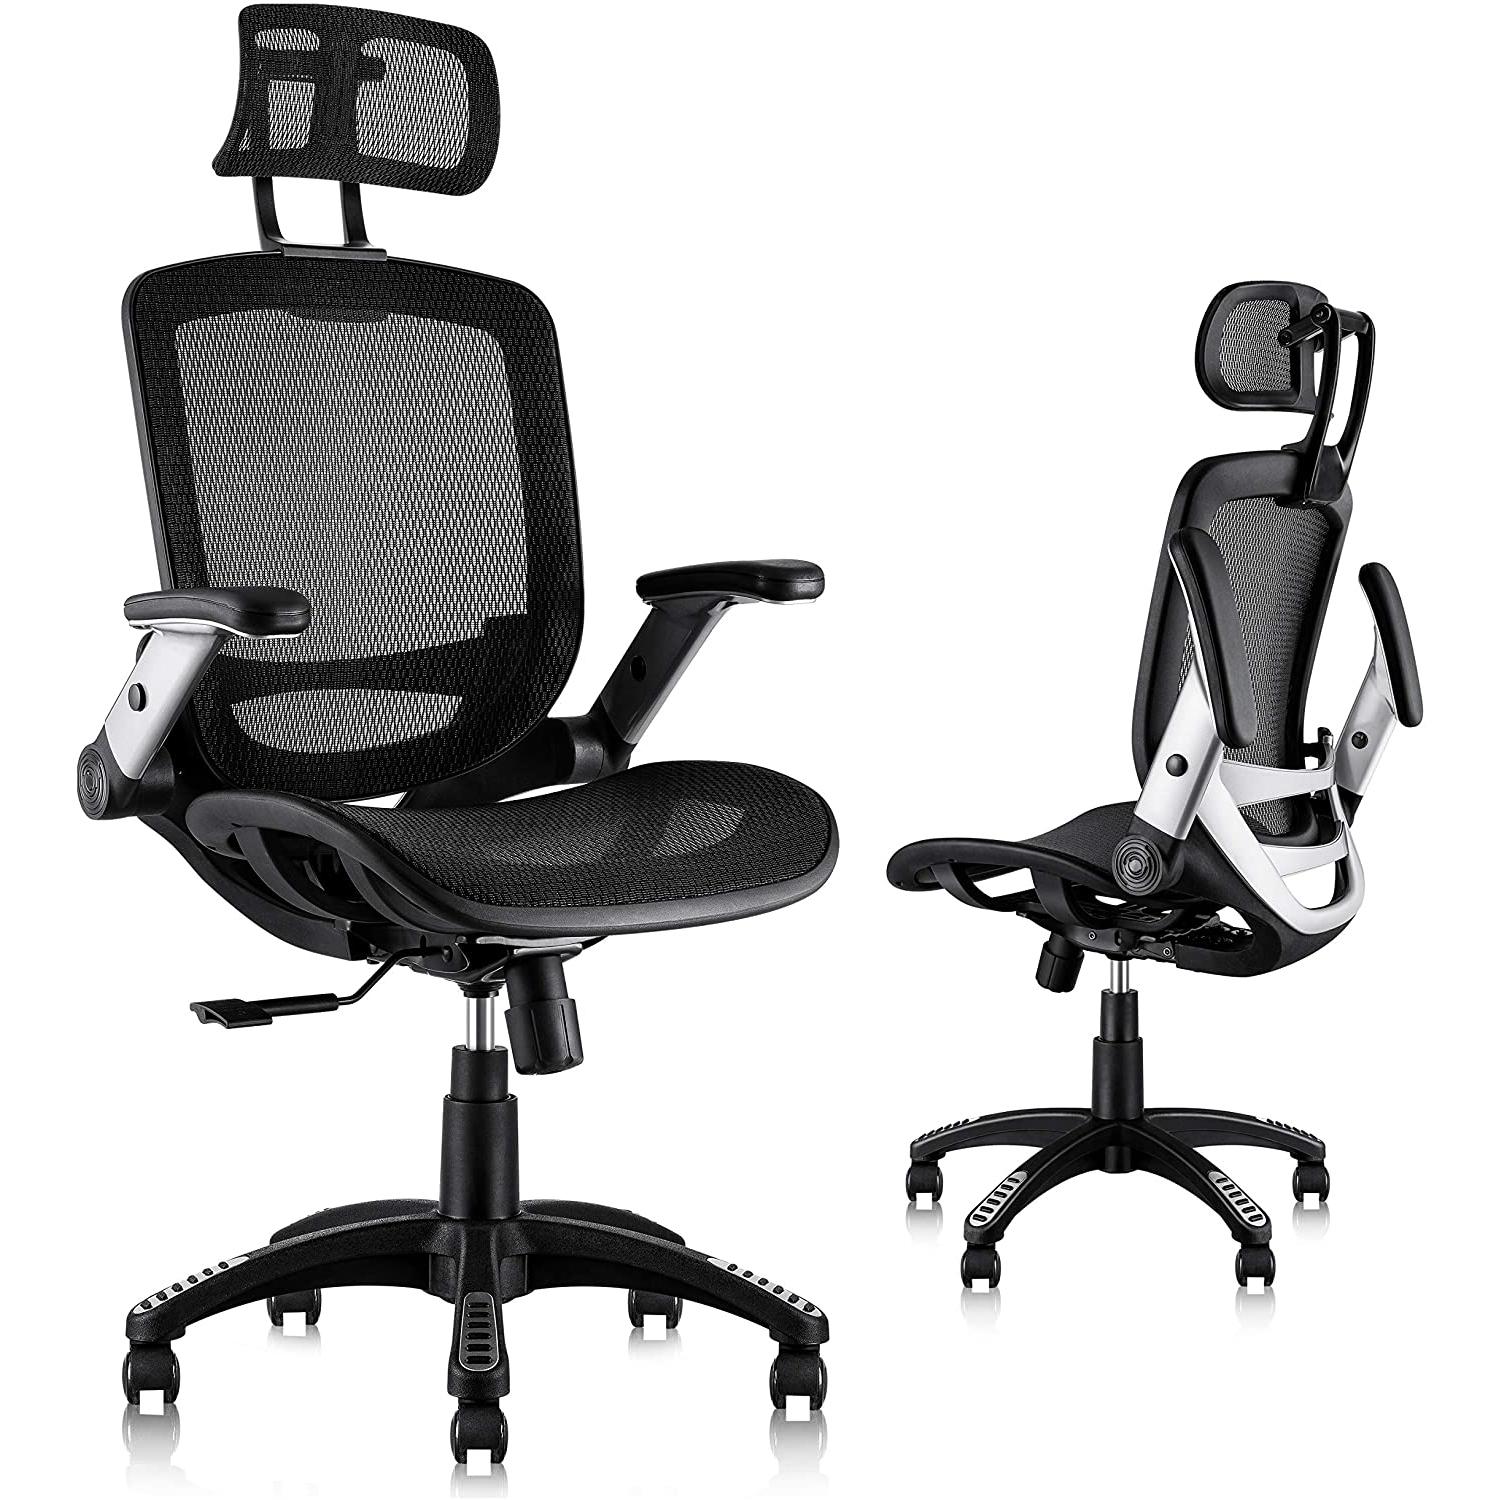 Gabrylly Ergonomic Mesh Office Chair for $231.60 Shipped